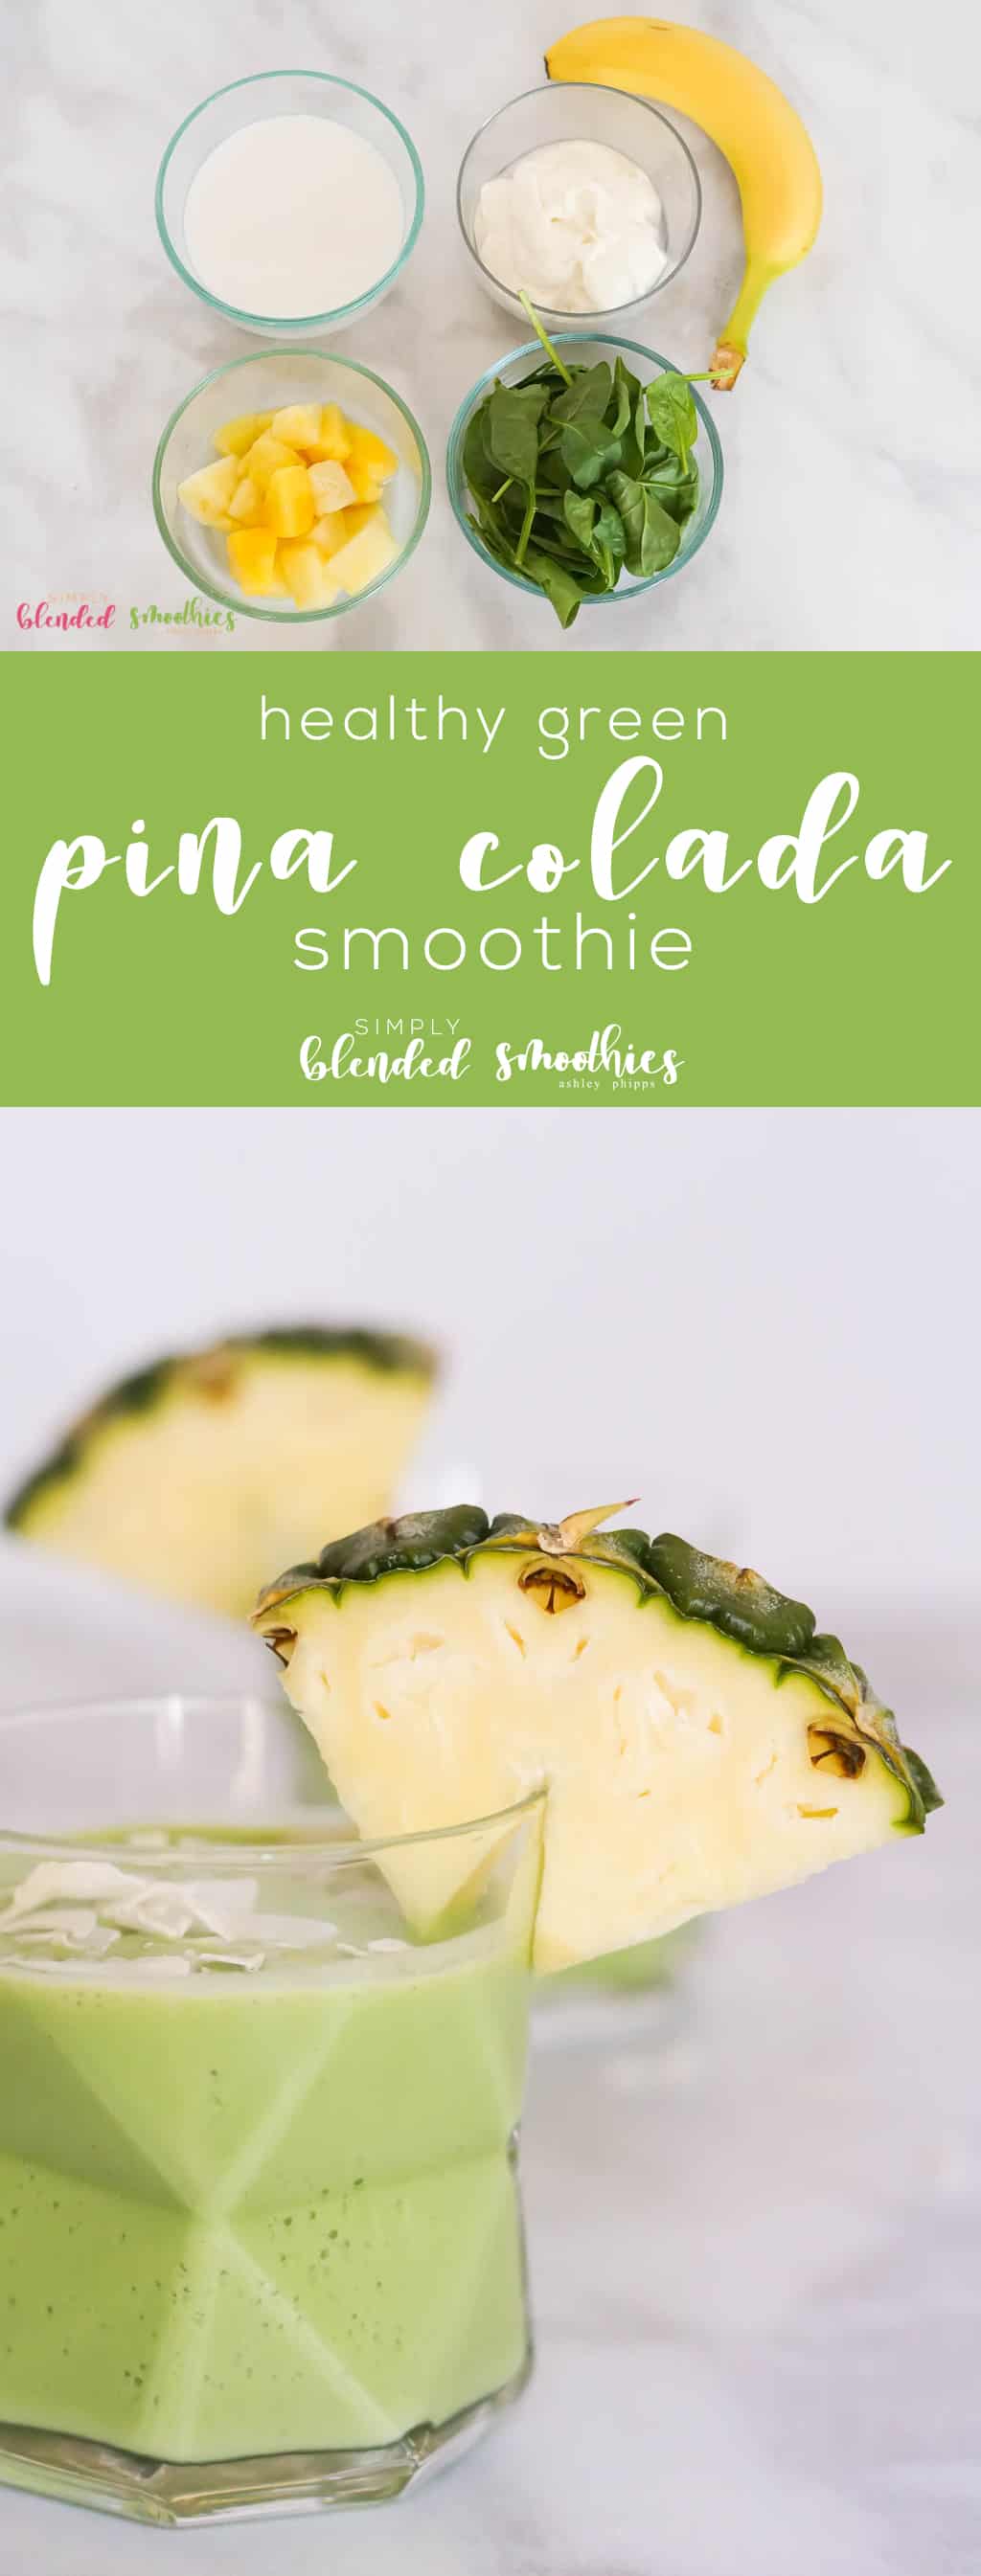 Healthy Pina Colada Smoothie - Green Pina Colada Smoothie